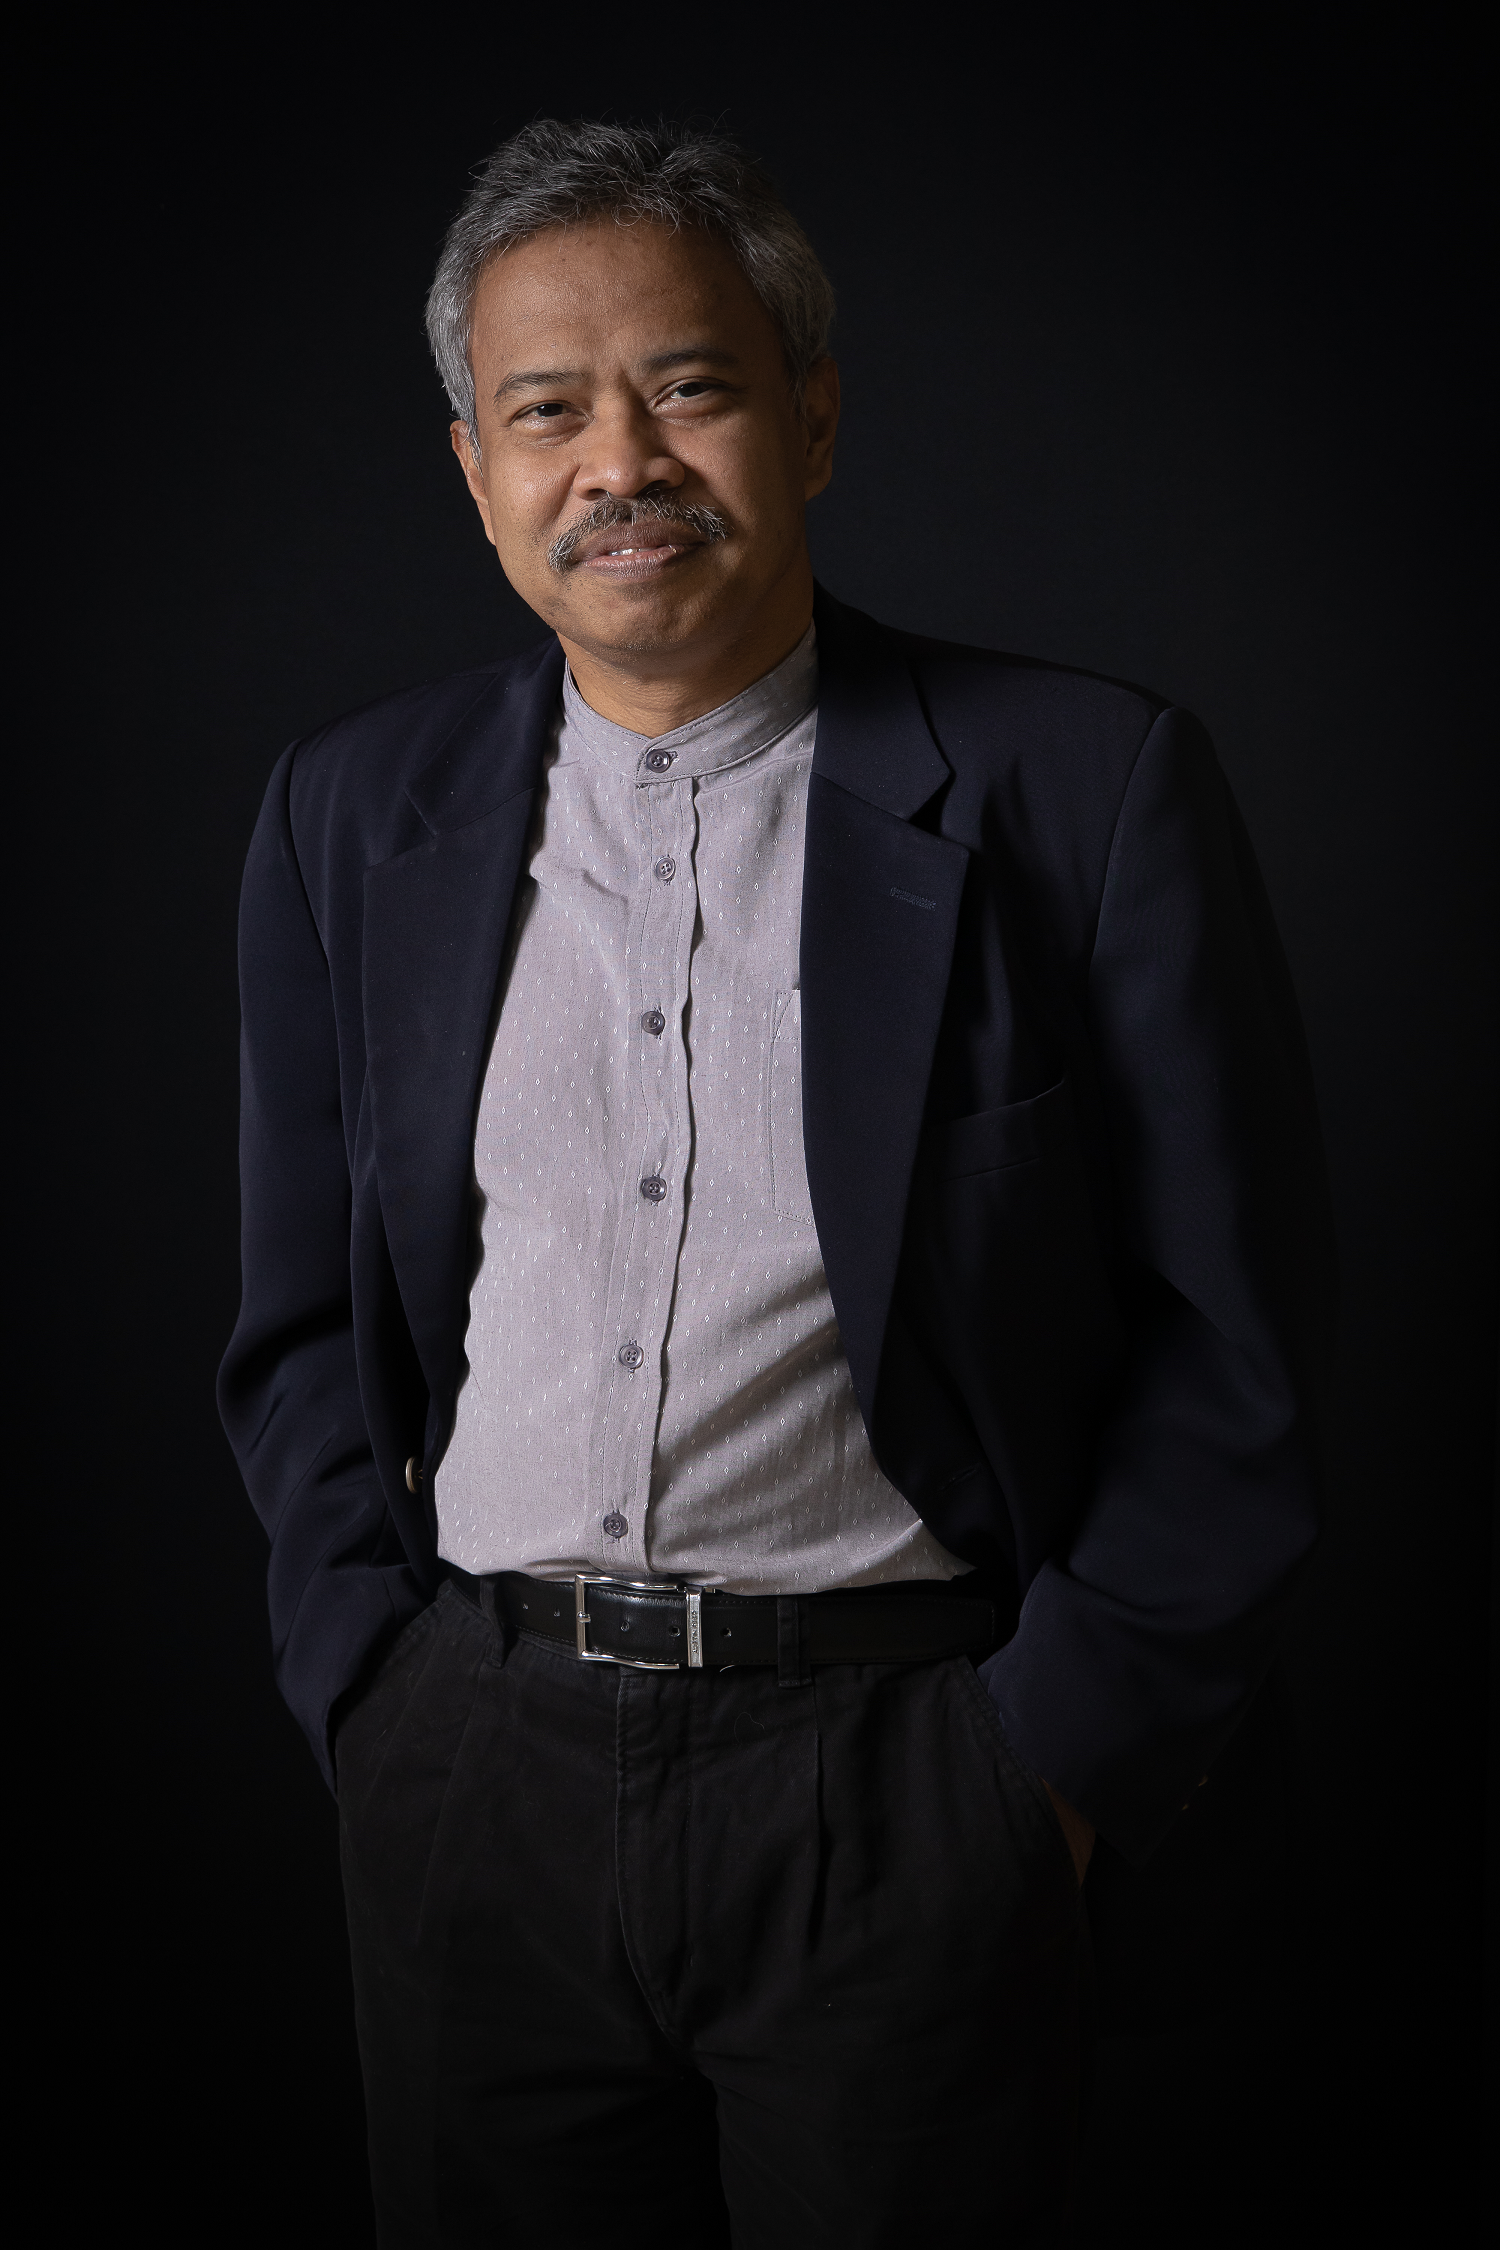 YBhg Professor Datu Mohd Fadzil Abdul Rahman